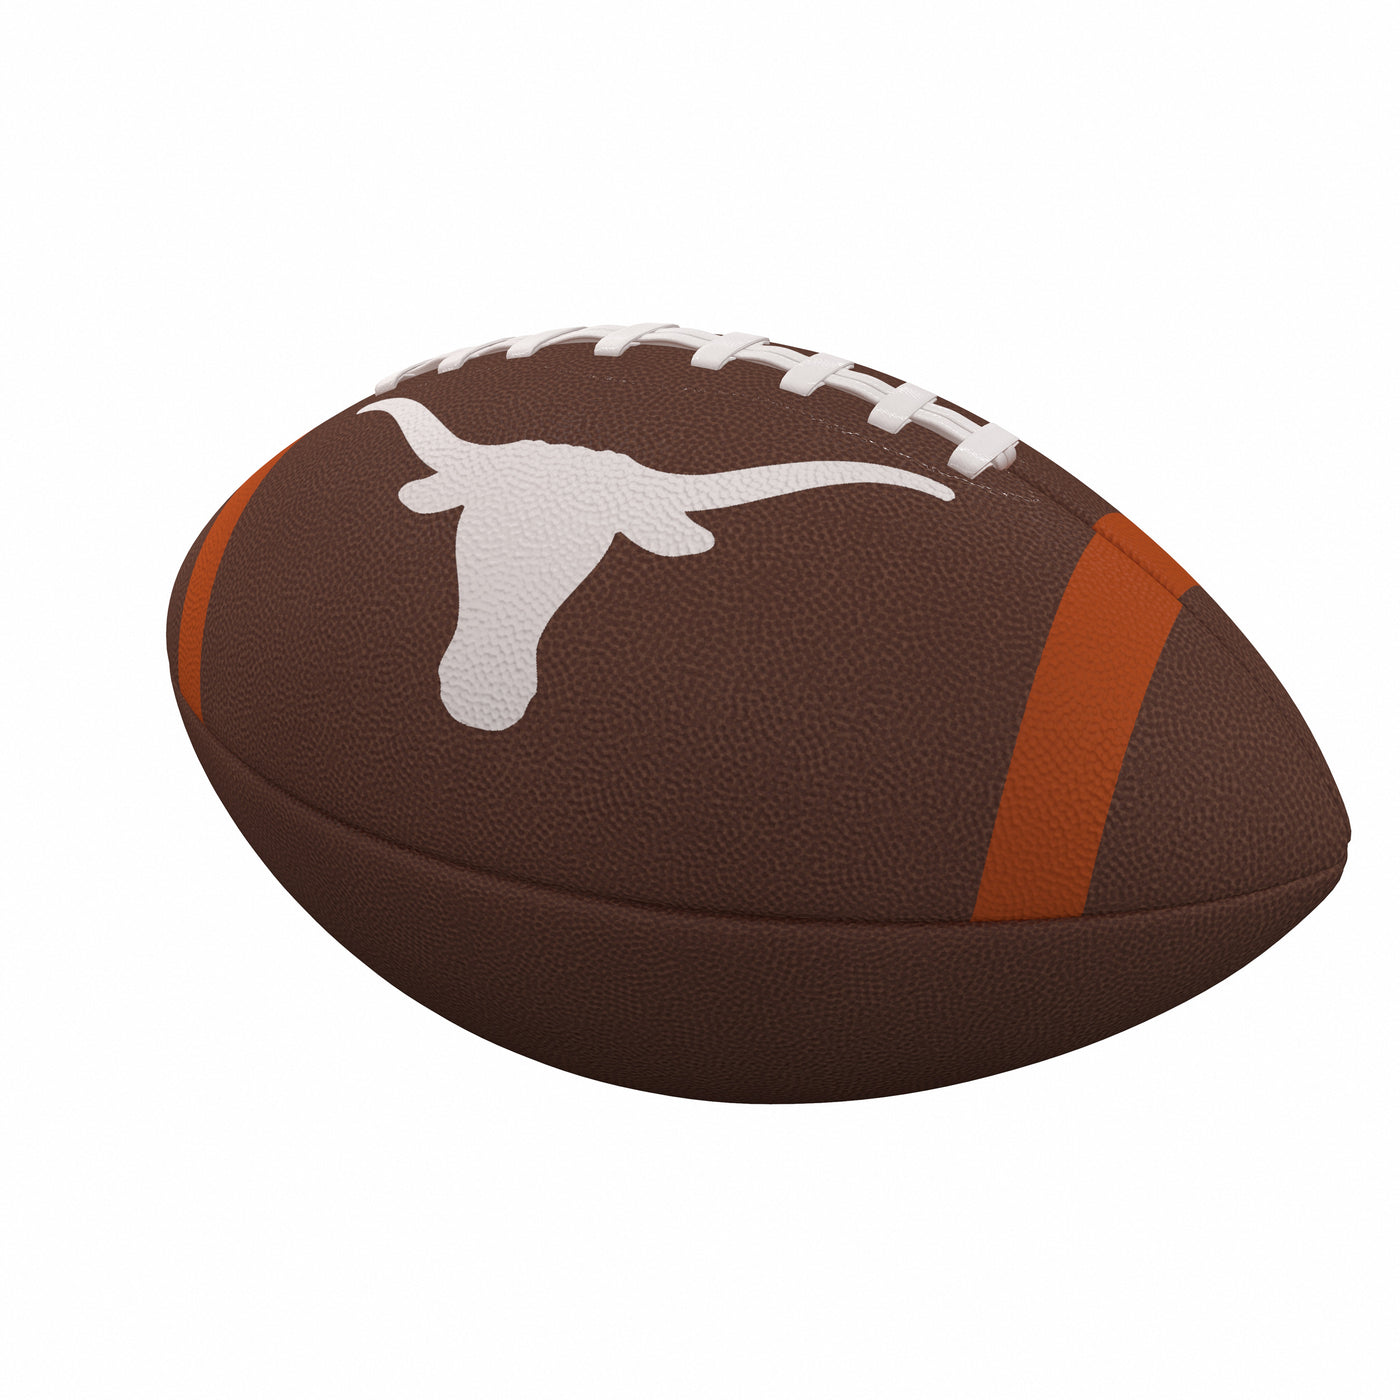 Texas Team Stripe Official-Size Composite Football